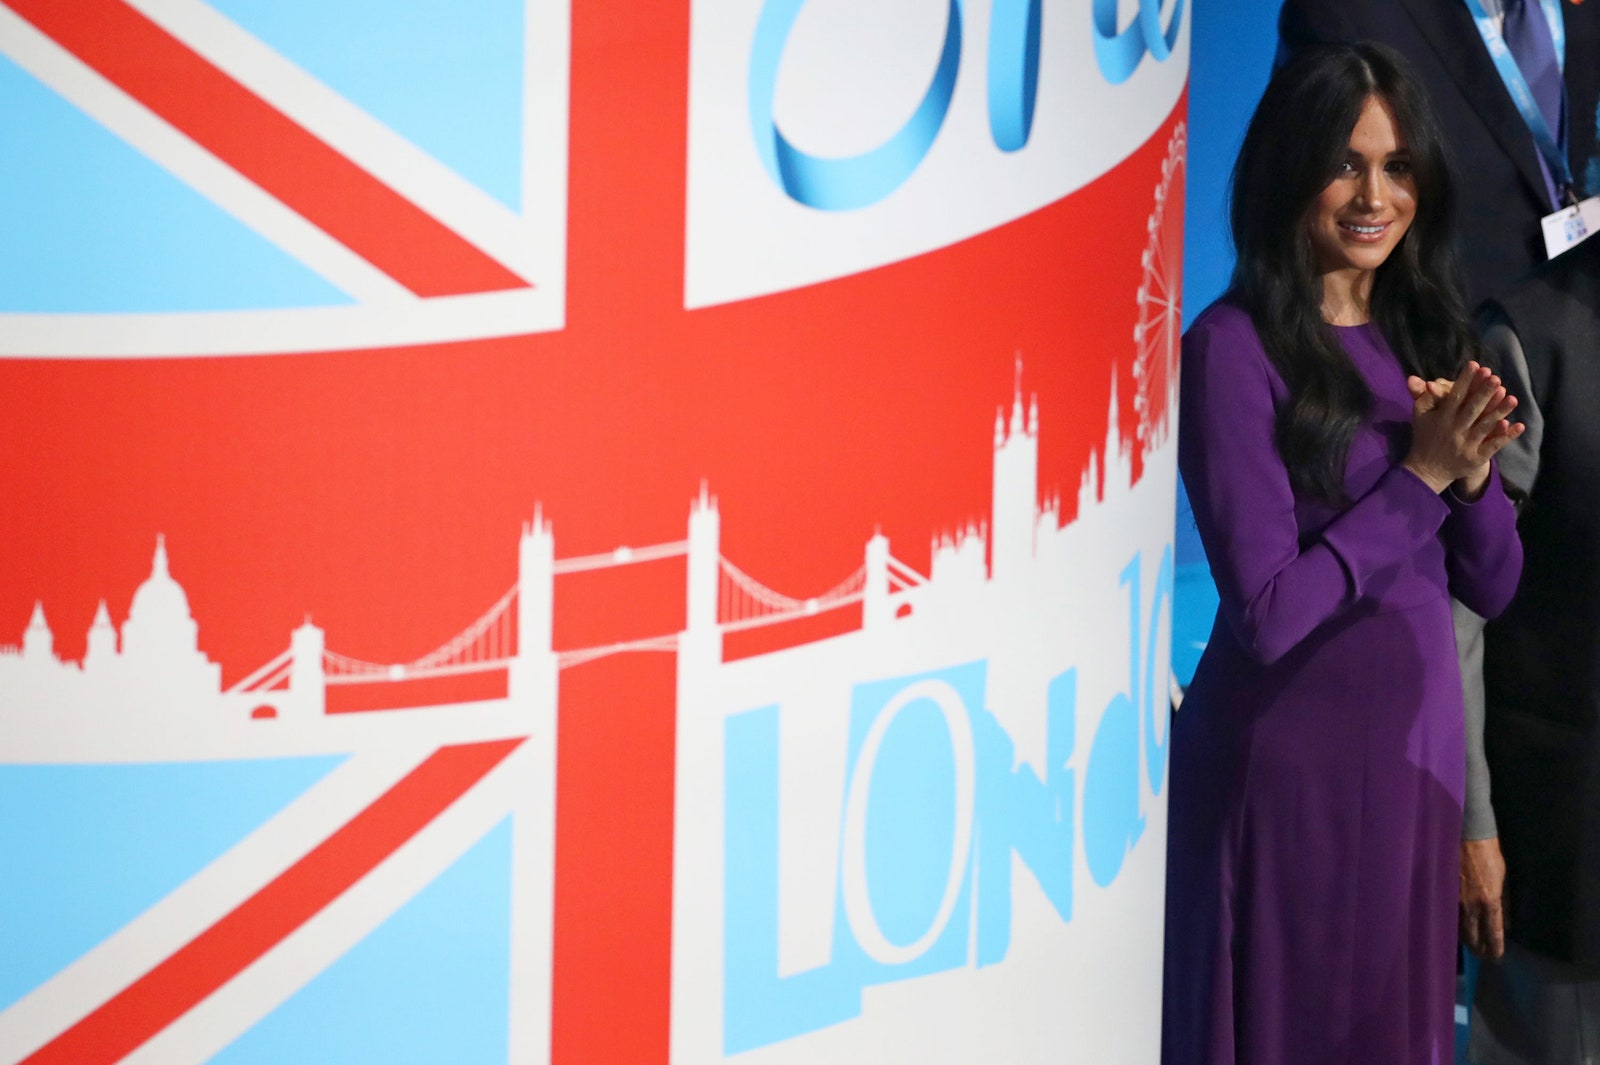 Меган Маркл посетила церемонию открытия саммита One Young World